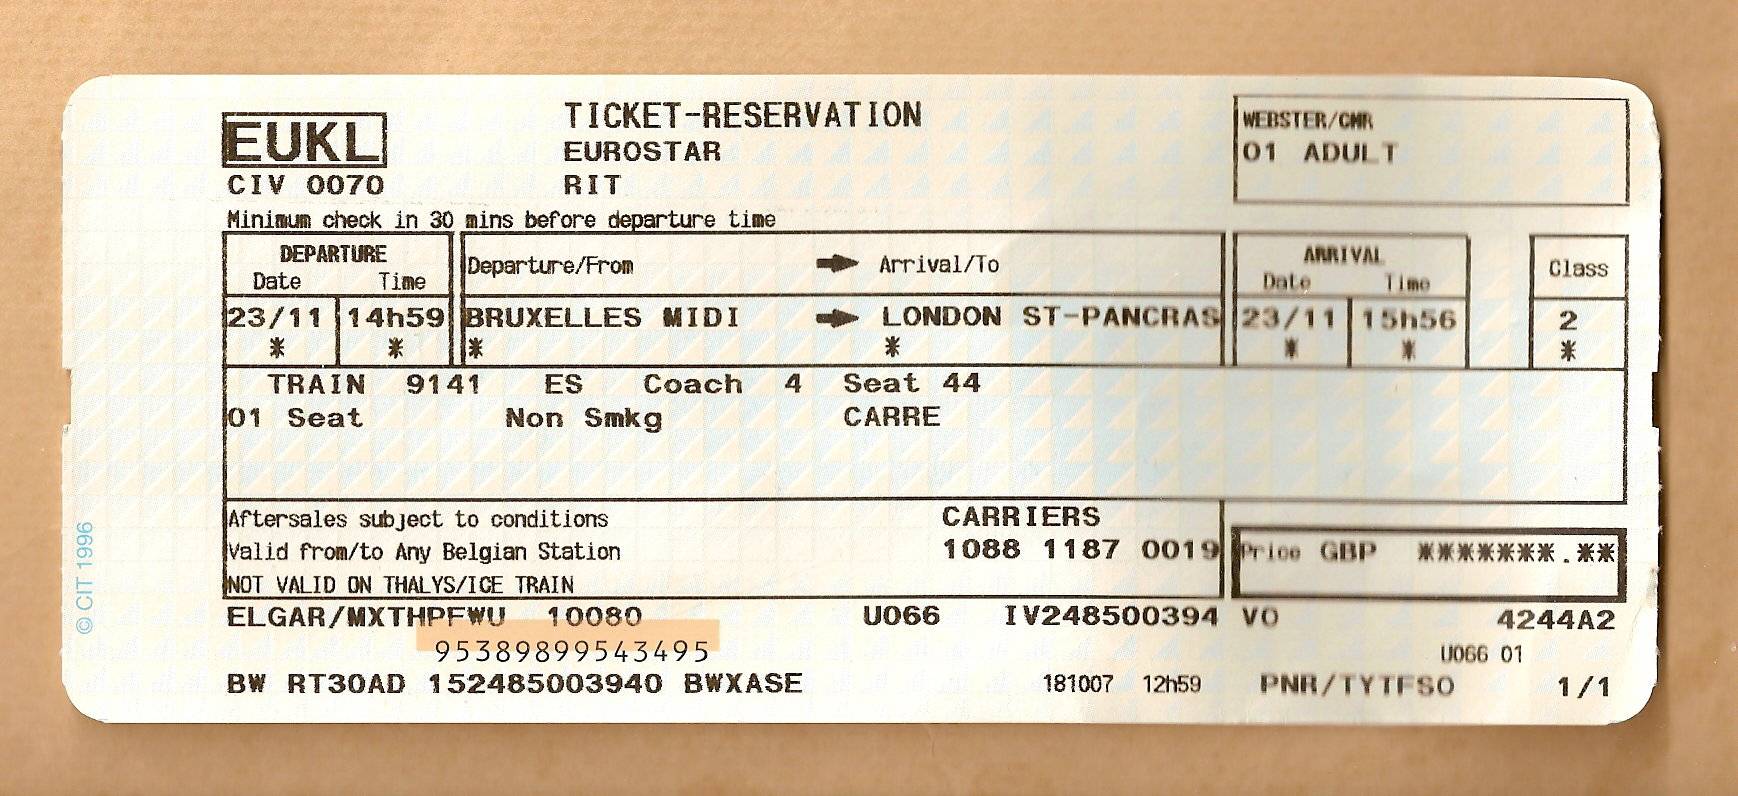 Ребенок 14 лет билет на самолет. Билет на поезд английский. Билеты на самолет. Билет на поезд немецкий. Немецкие билеты на самолет.